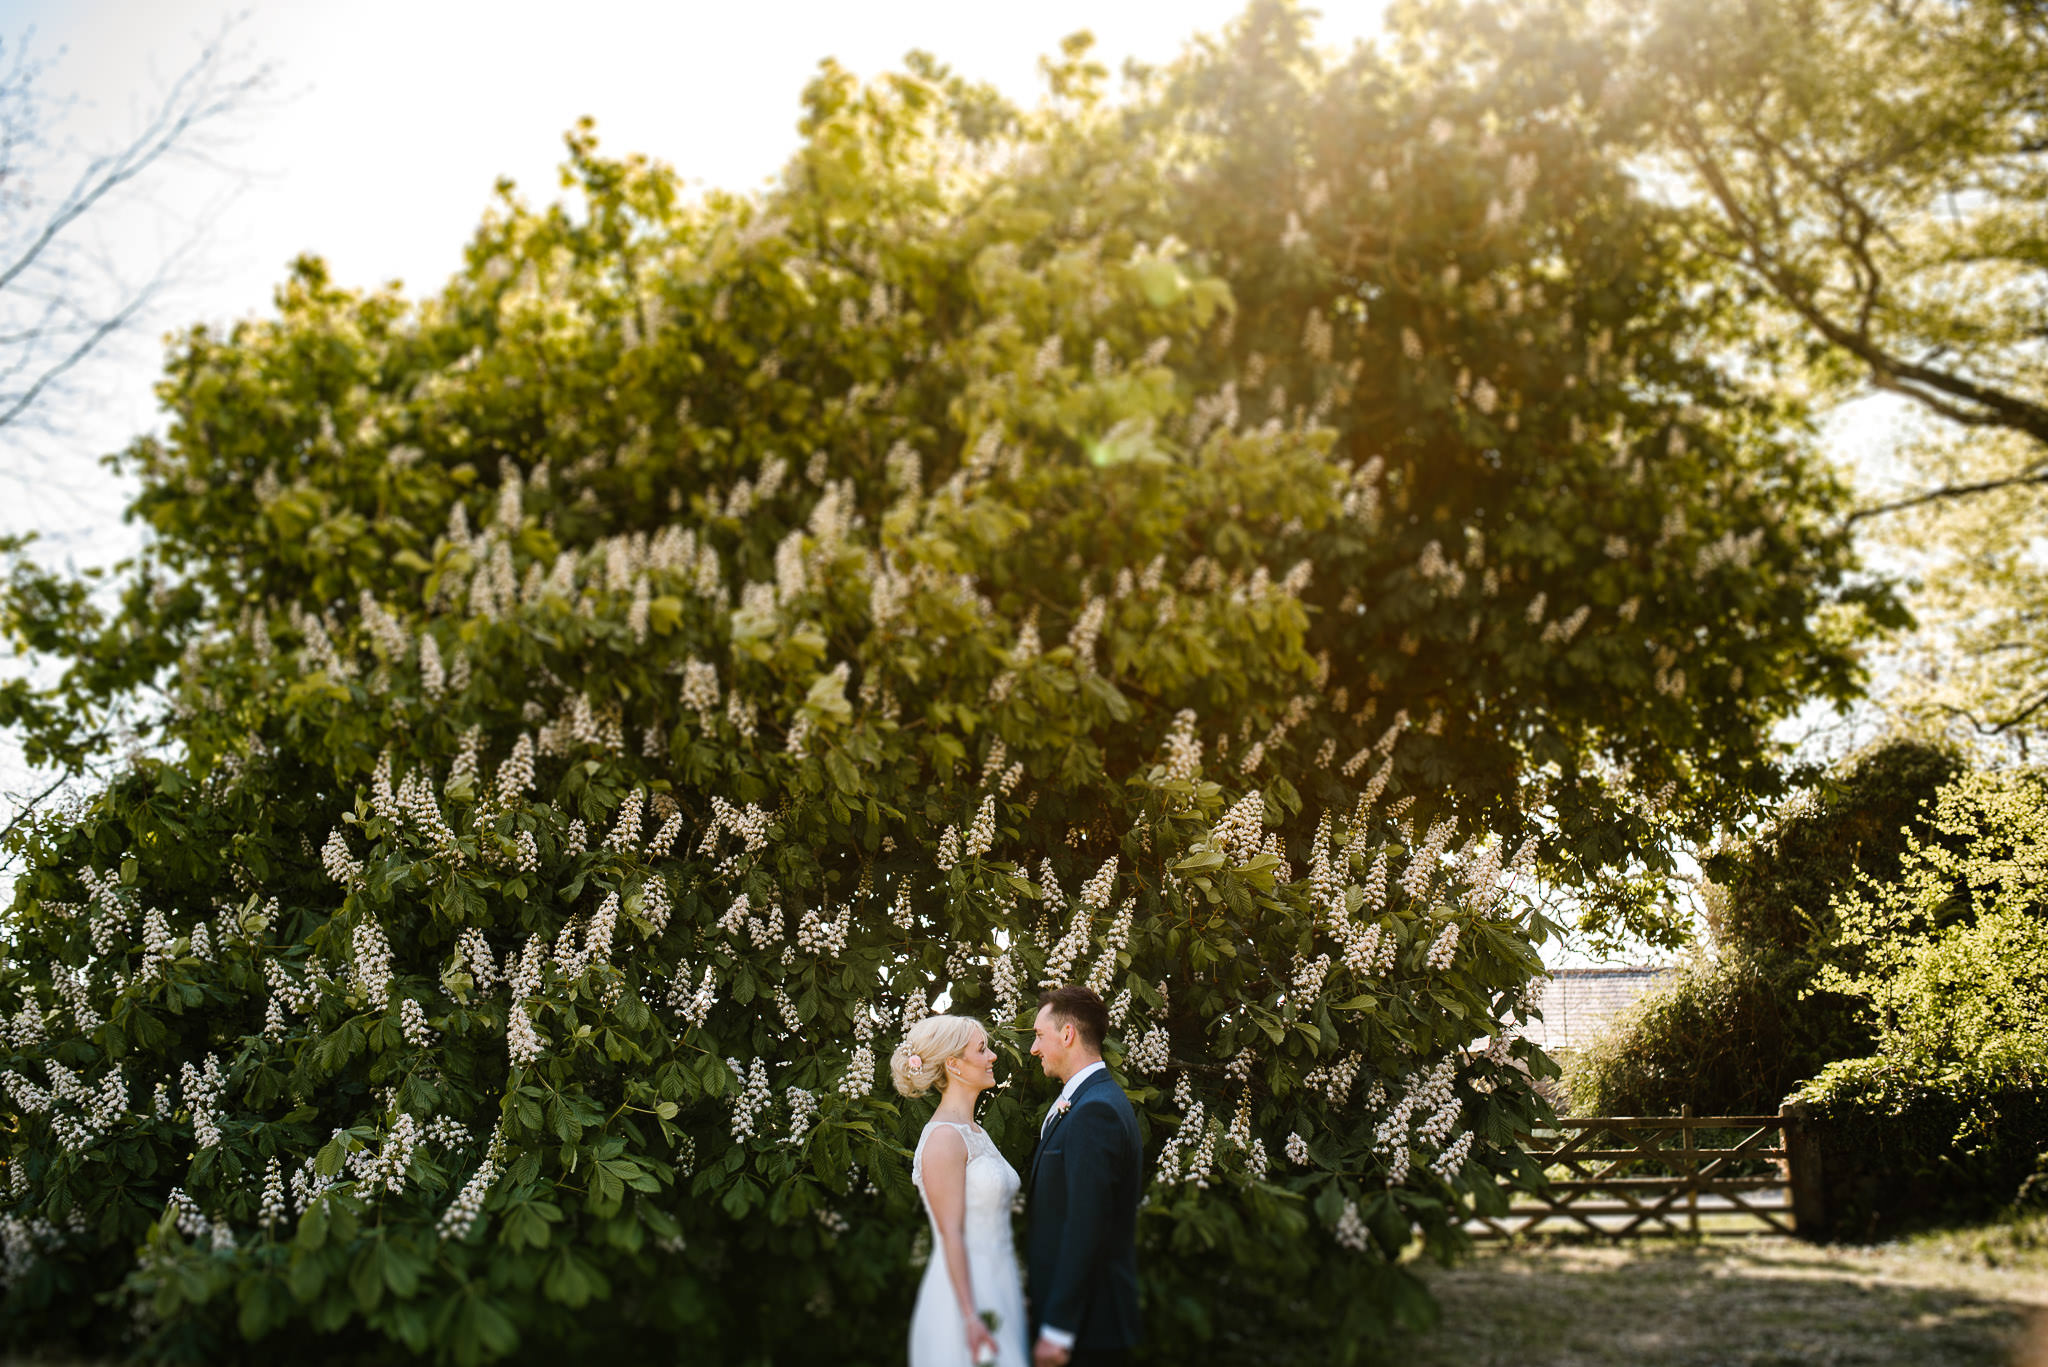 BEST-WEDDING-PHOTOGRAPHER-CORNWALL-2018-110.jpg